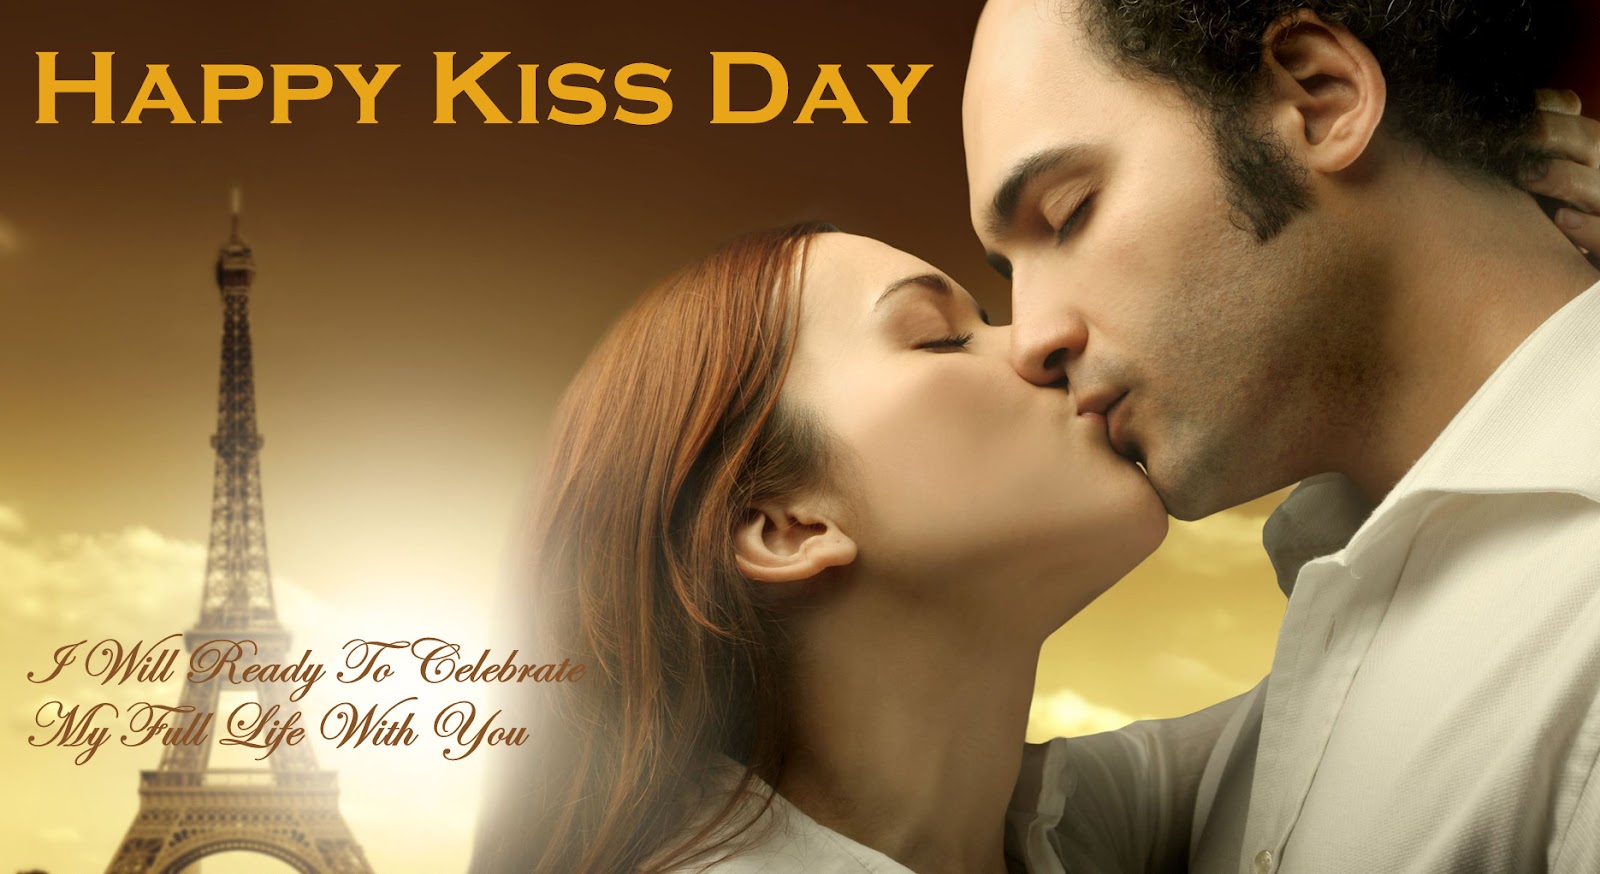 Happy Kiss Day 2017 Hd Image For Girlfriend & Boyfriend - Happy Kiss Day Msg - HD Wallpaper 